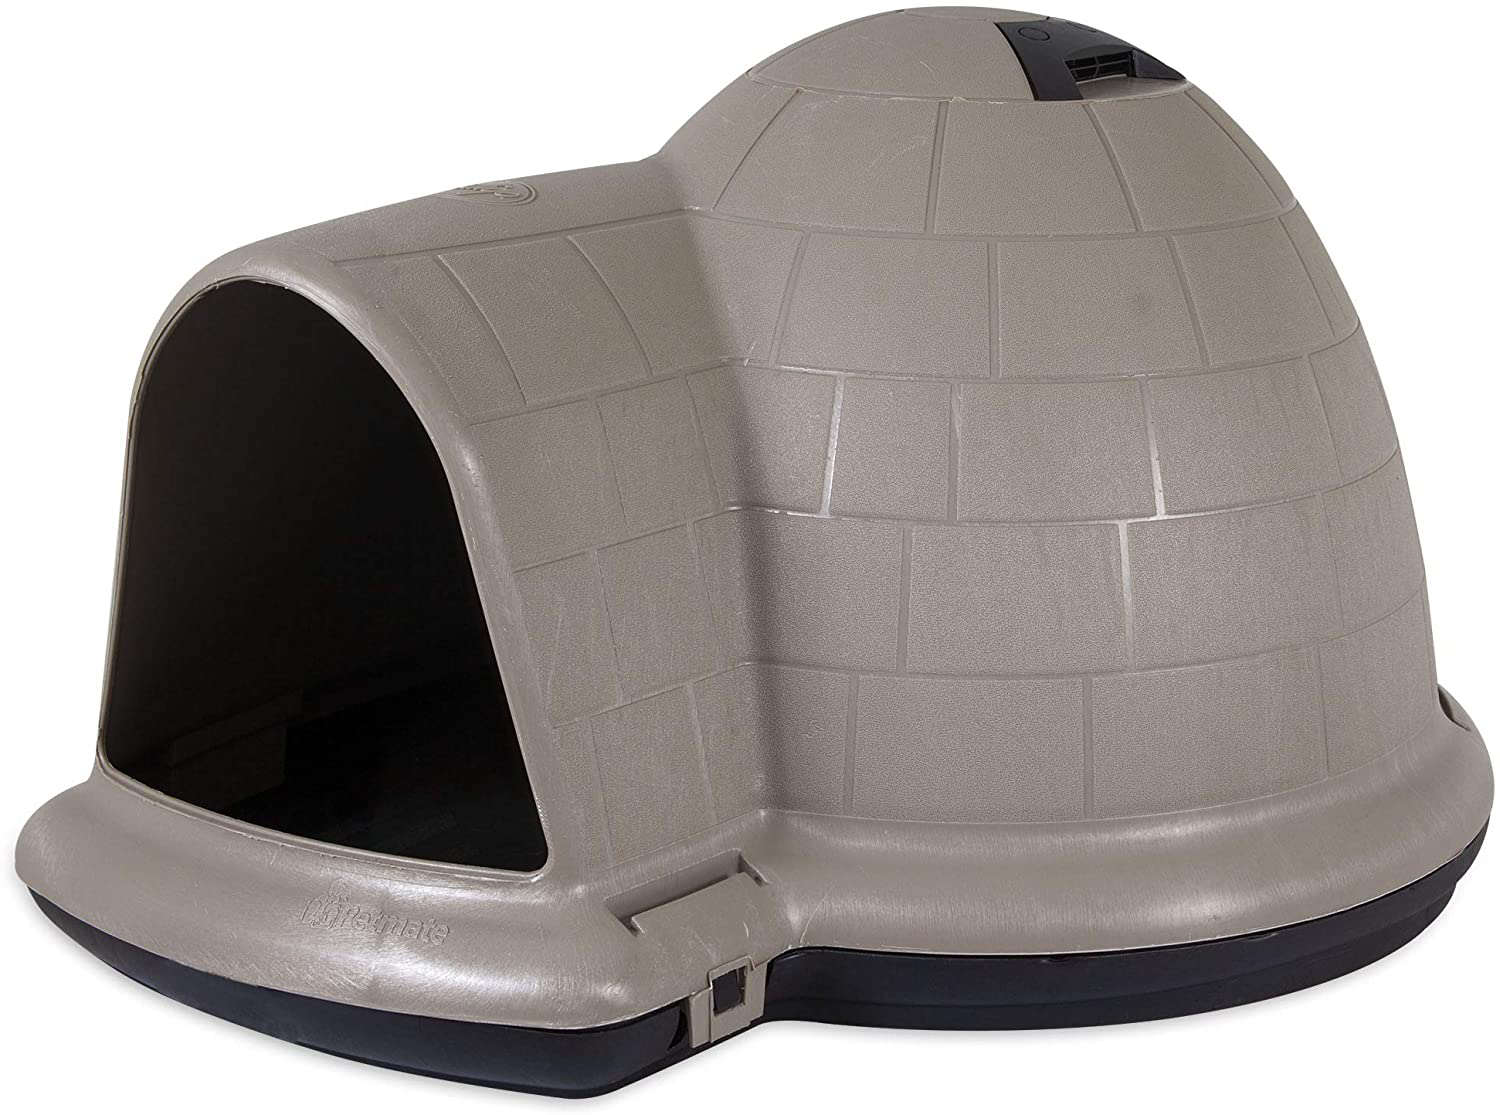 Petmate Indigo Dog House All-Weather Protection Taupe/Black 3 Sizes Available